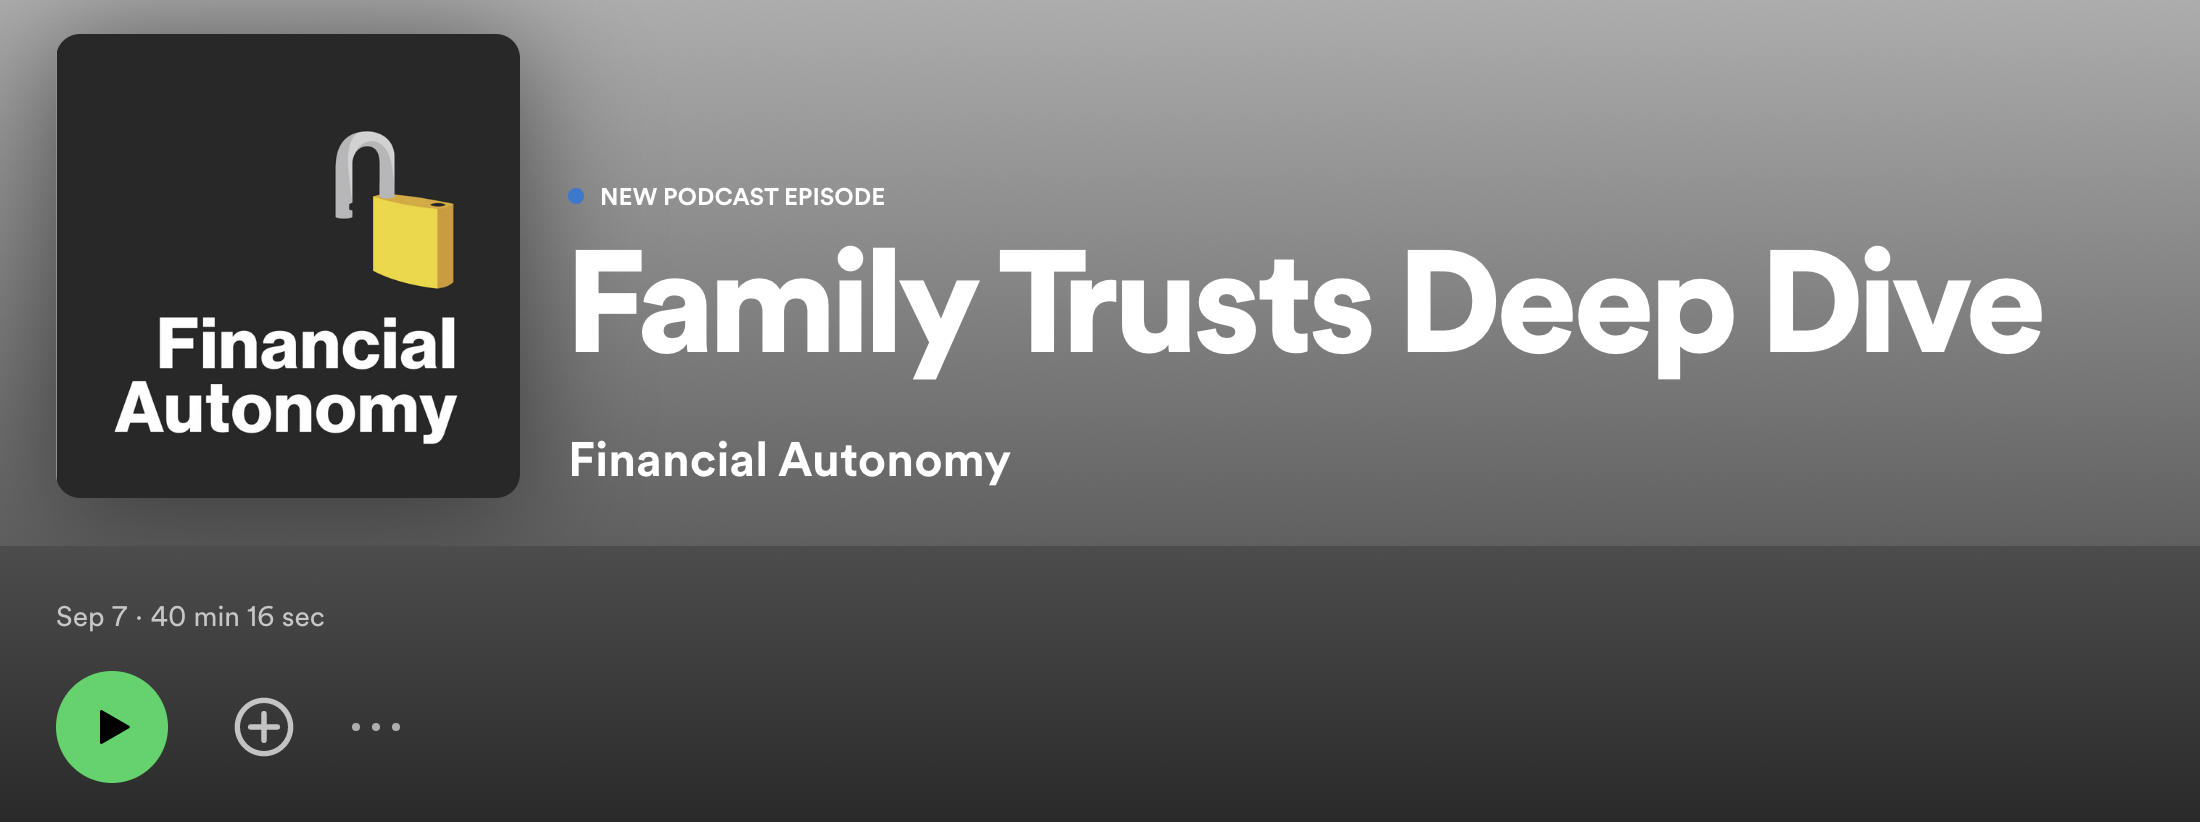 Financial autonomy podcast